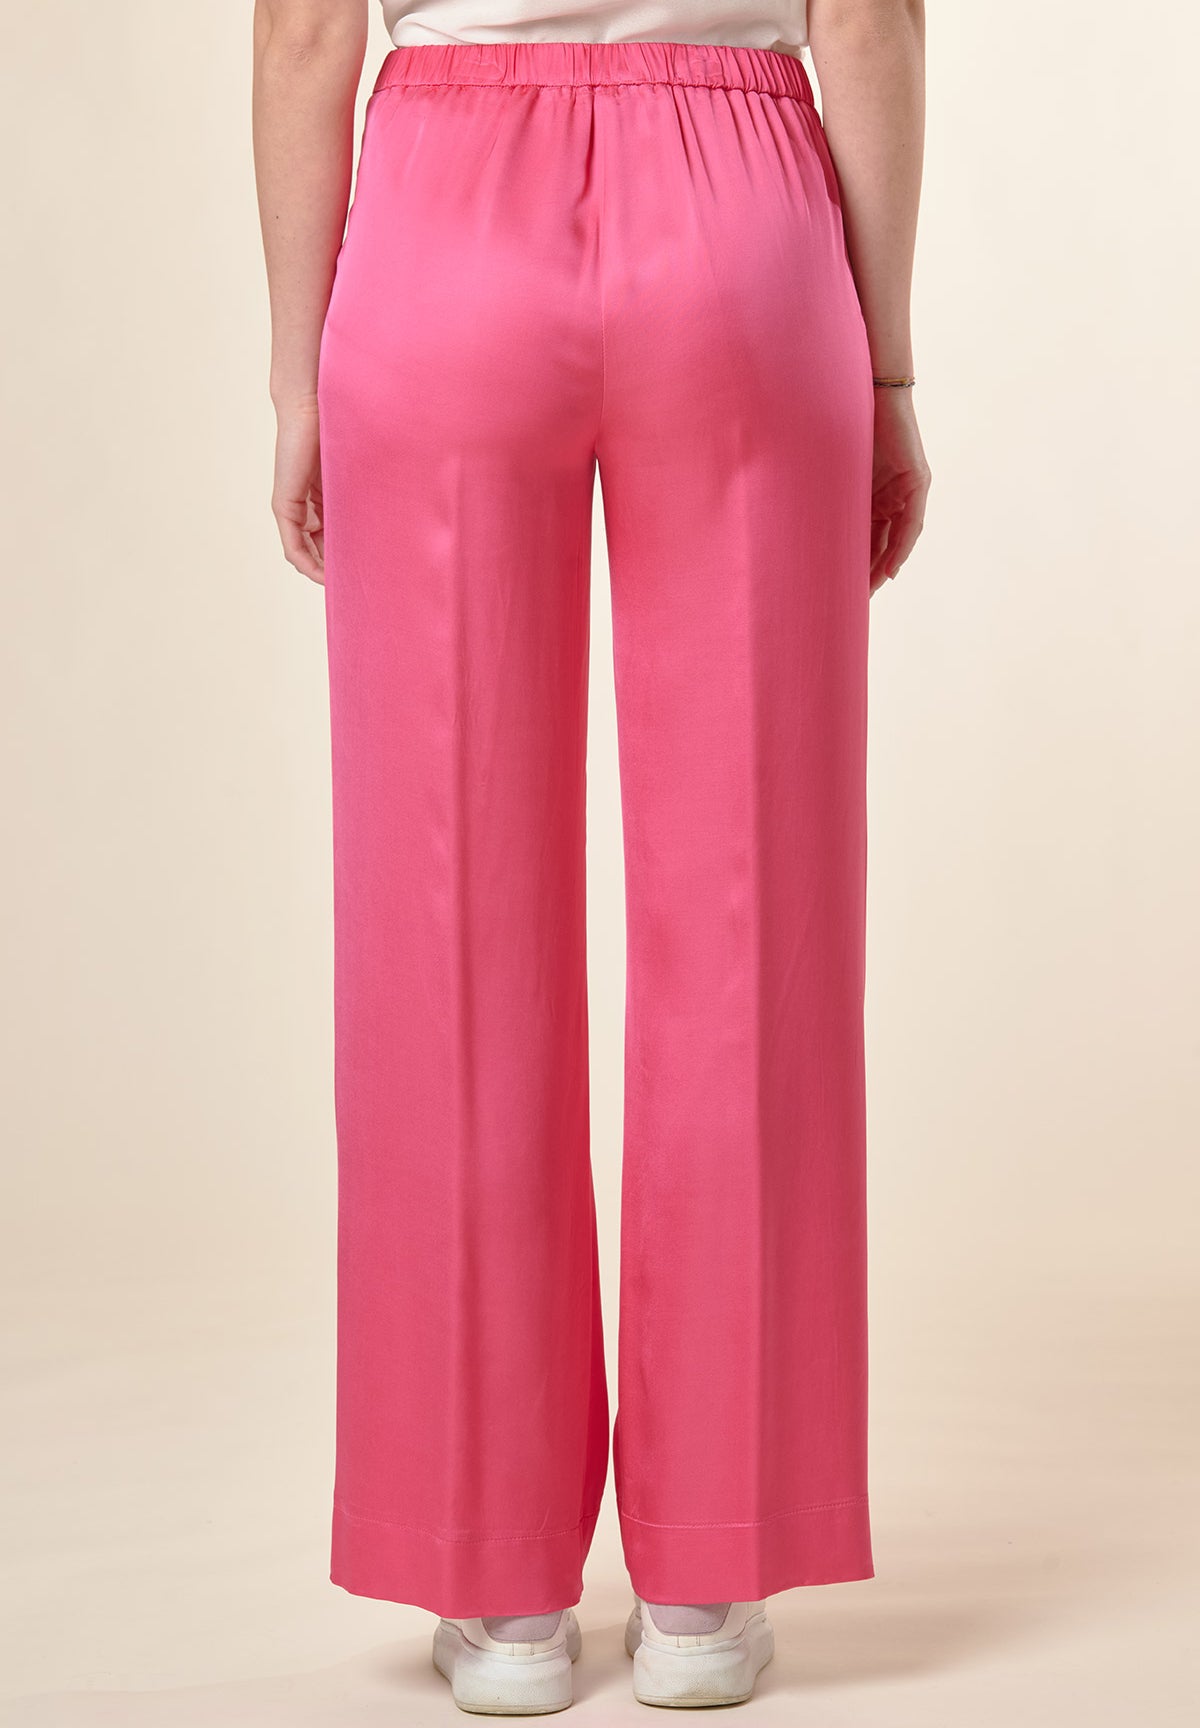 Pantalone palazzo rosa corallo viscosa